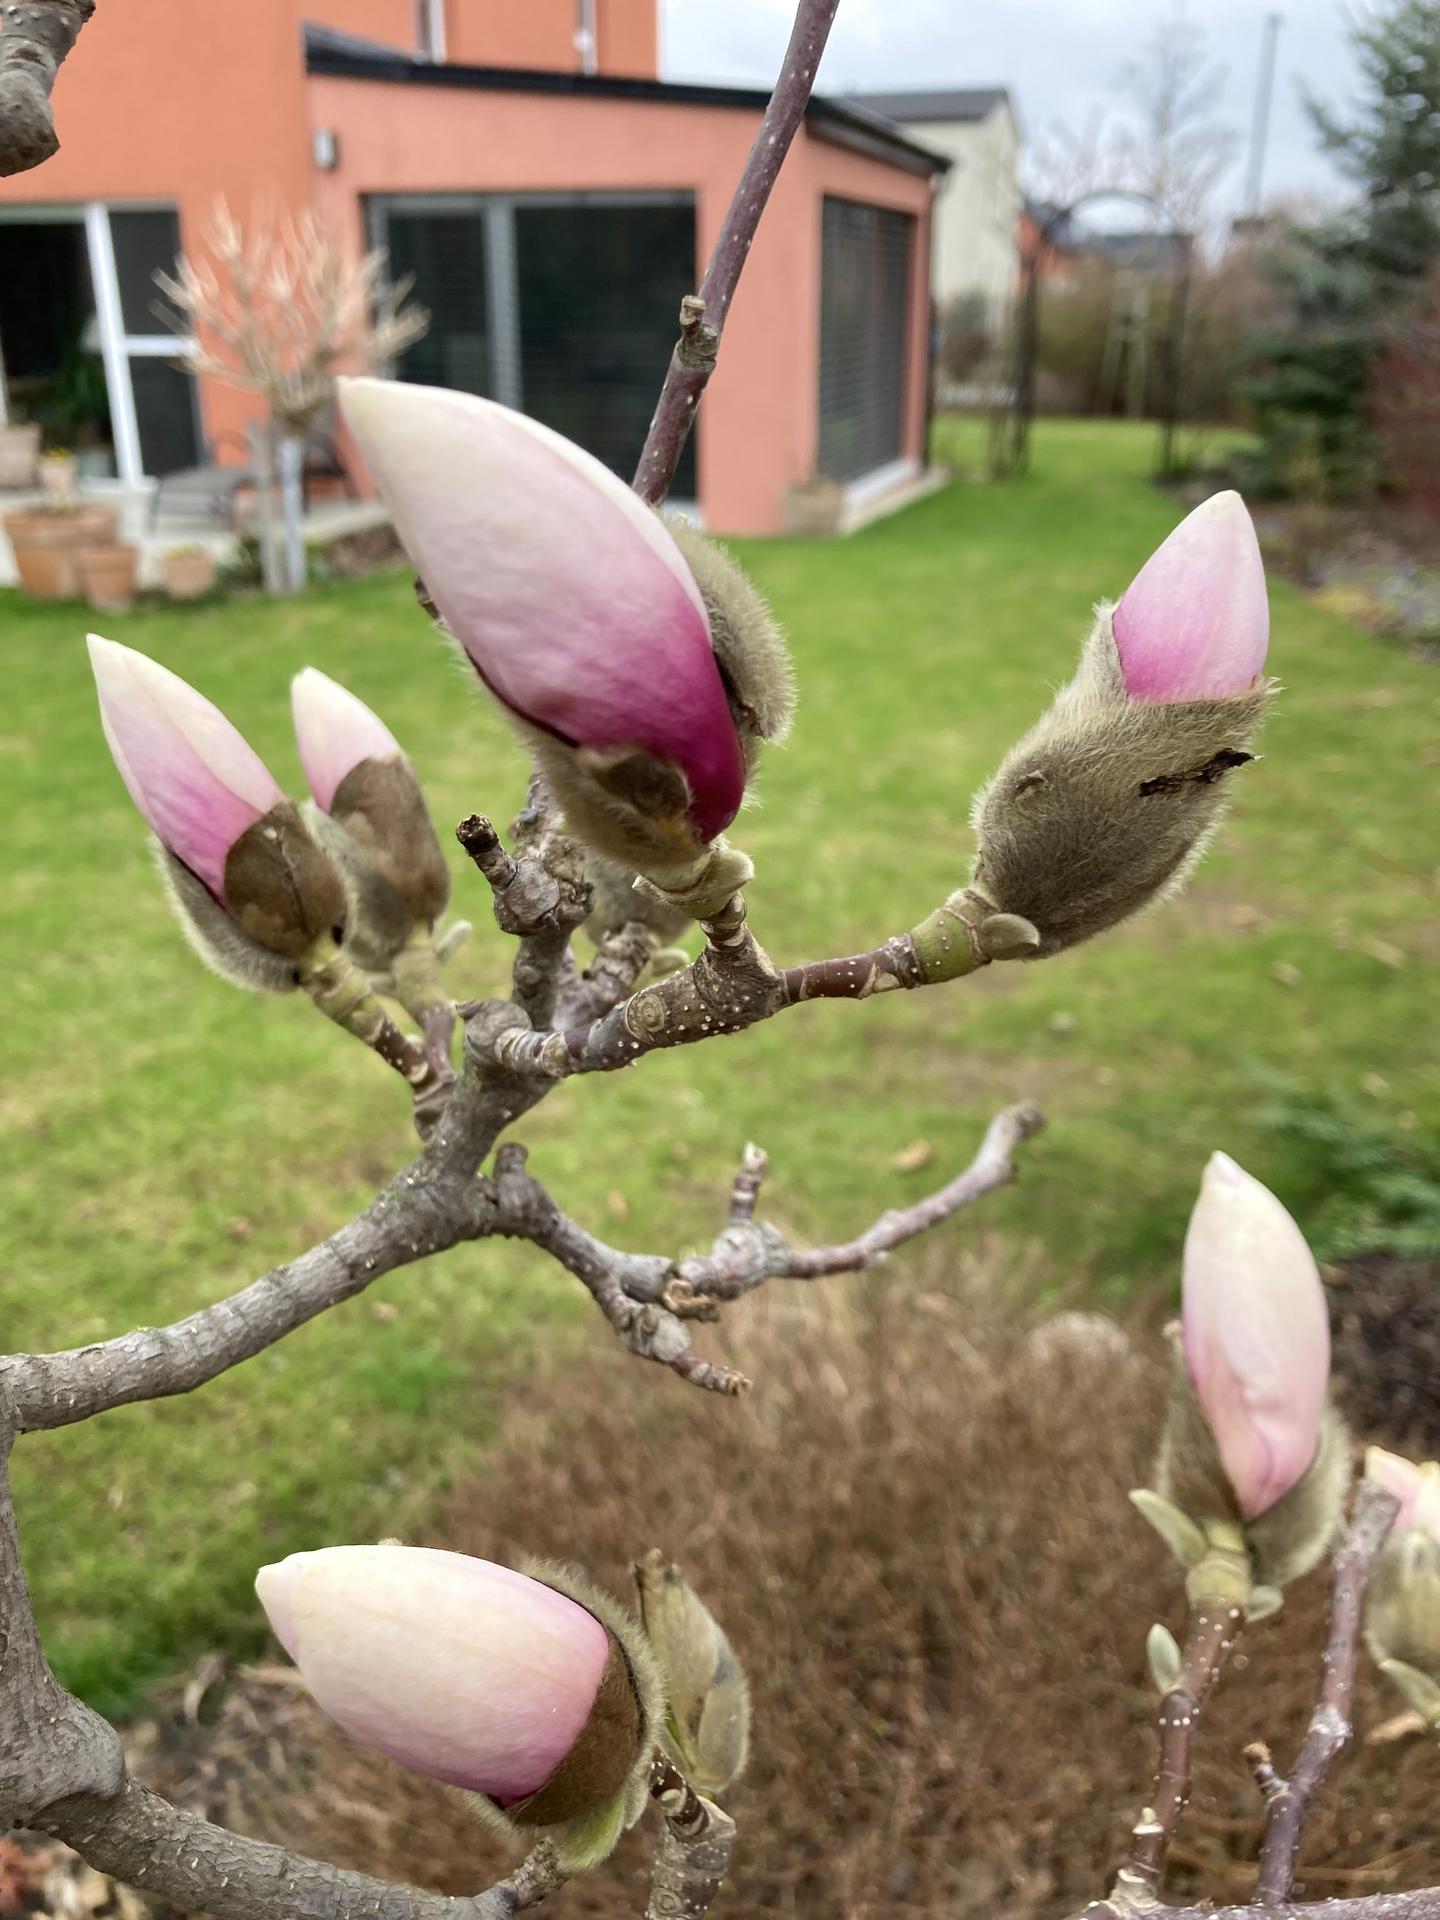 Zahrada 2022 - magnolie letos opet trochu pomrzla... tak jsem si ta poupata pred temi nejhorsimi dubnovymi mrazy jeste aspon vyfotila😢